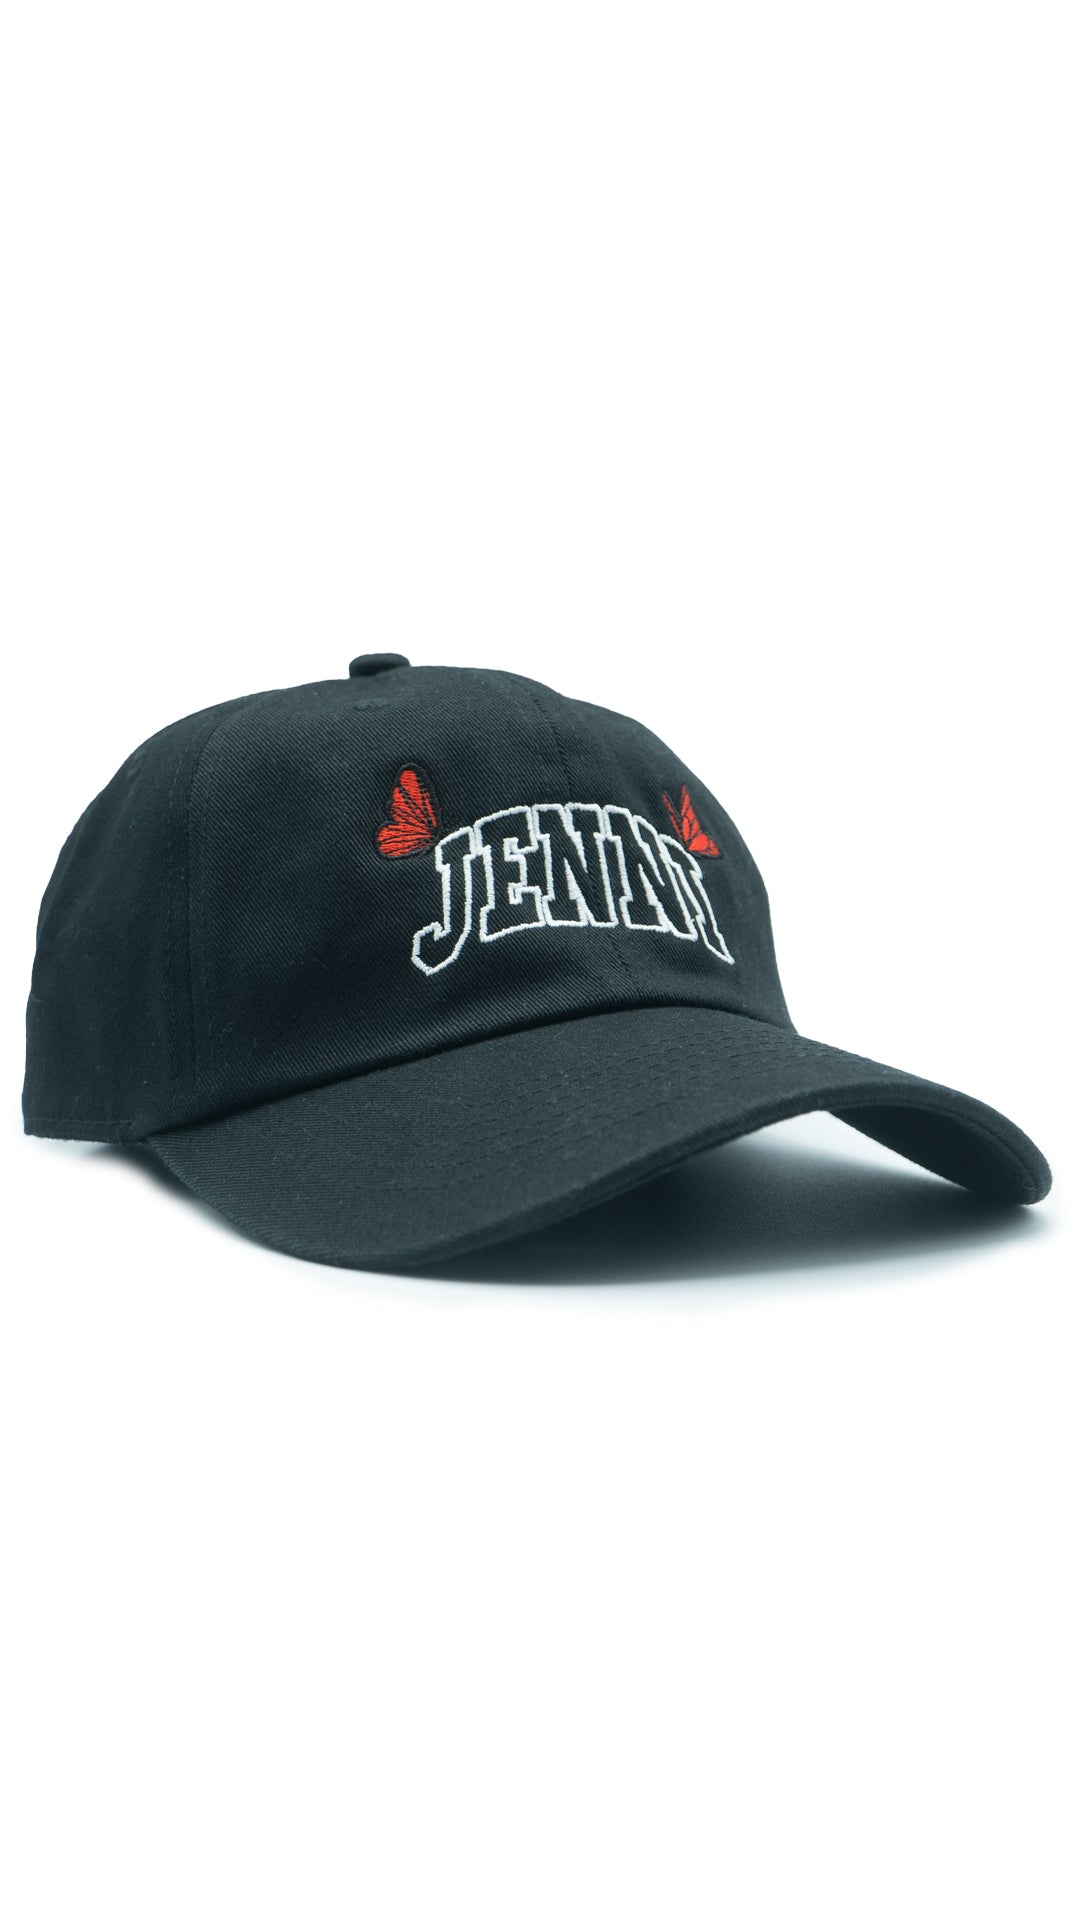 Jenni Butterly Black Dad Hat